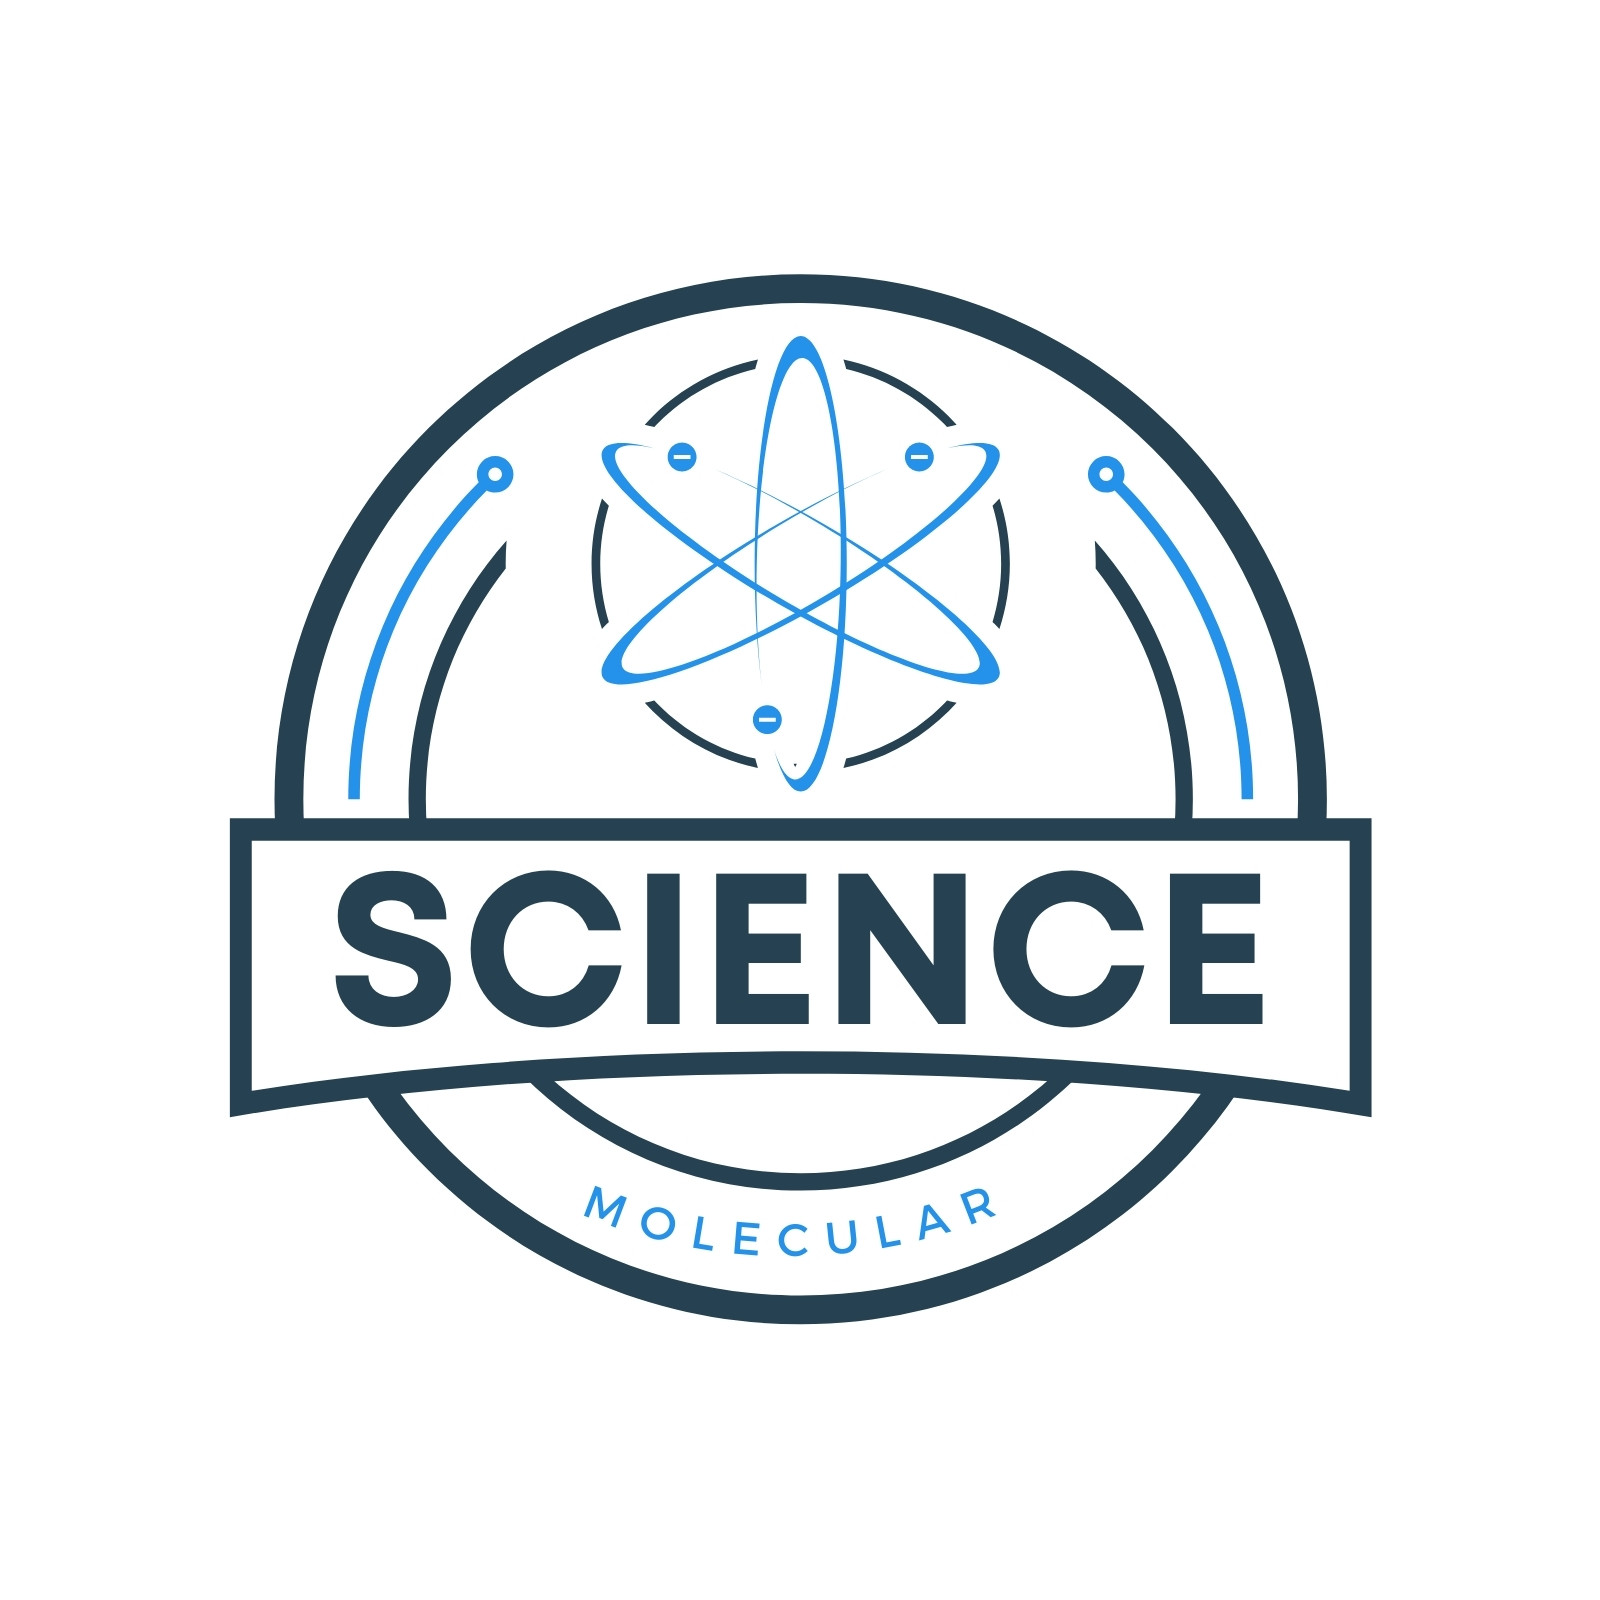 Earth Science Logo Maker | LOGO.com